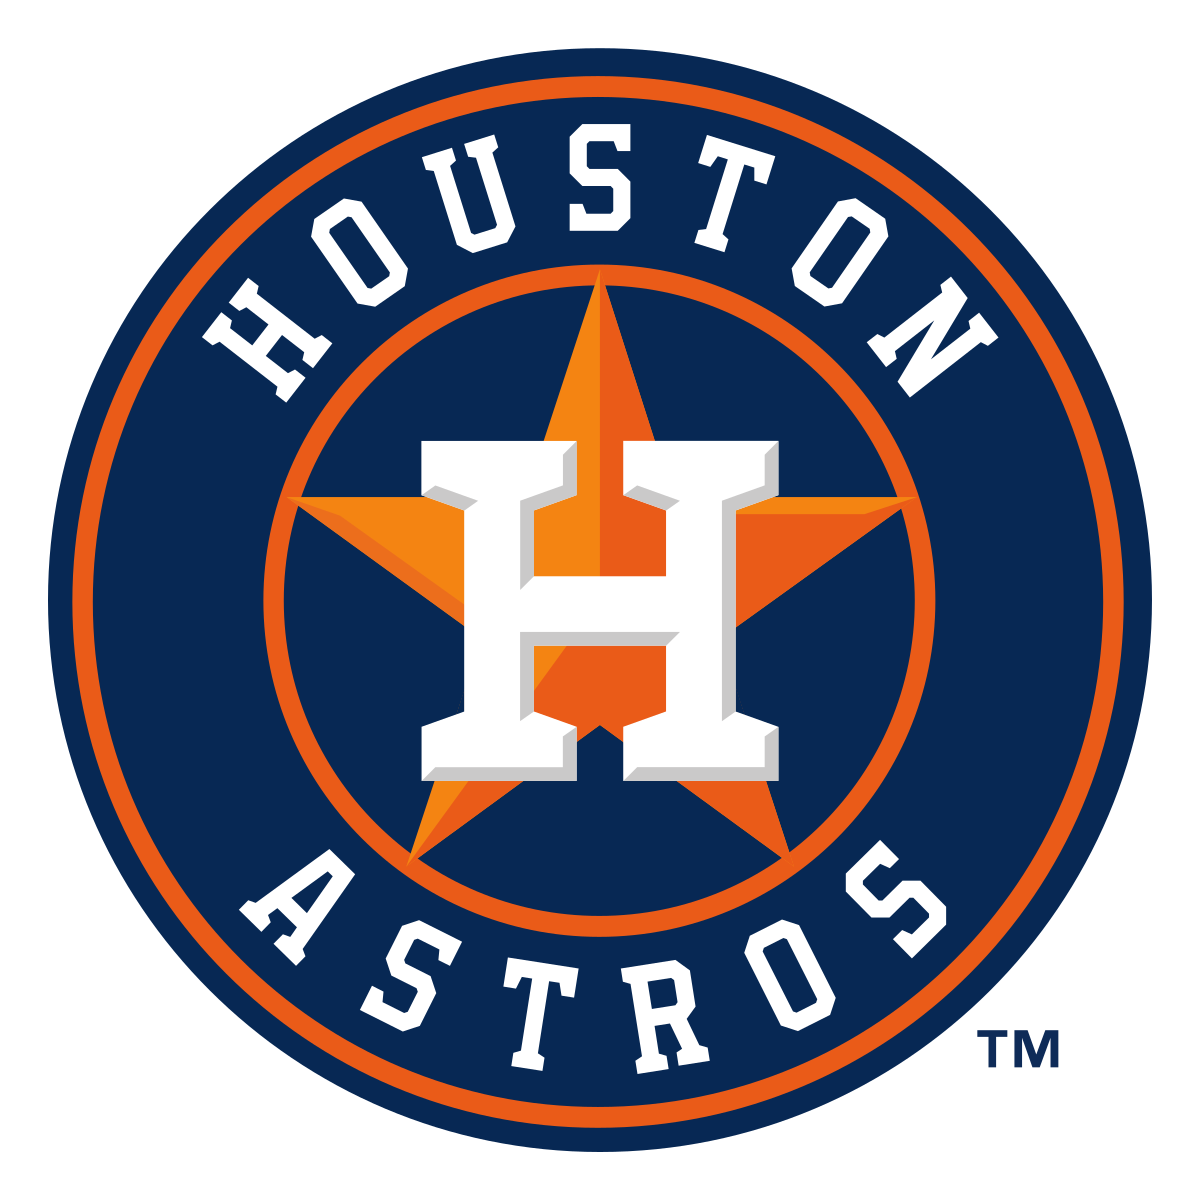 Presale Codes to purchase tickets for Houston Astros Postseason WORLD